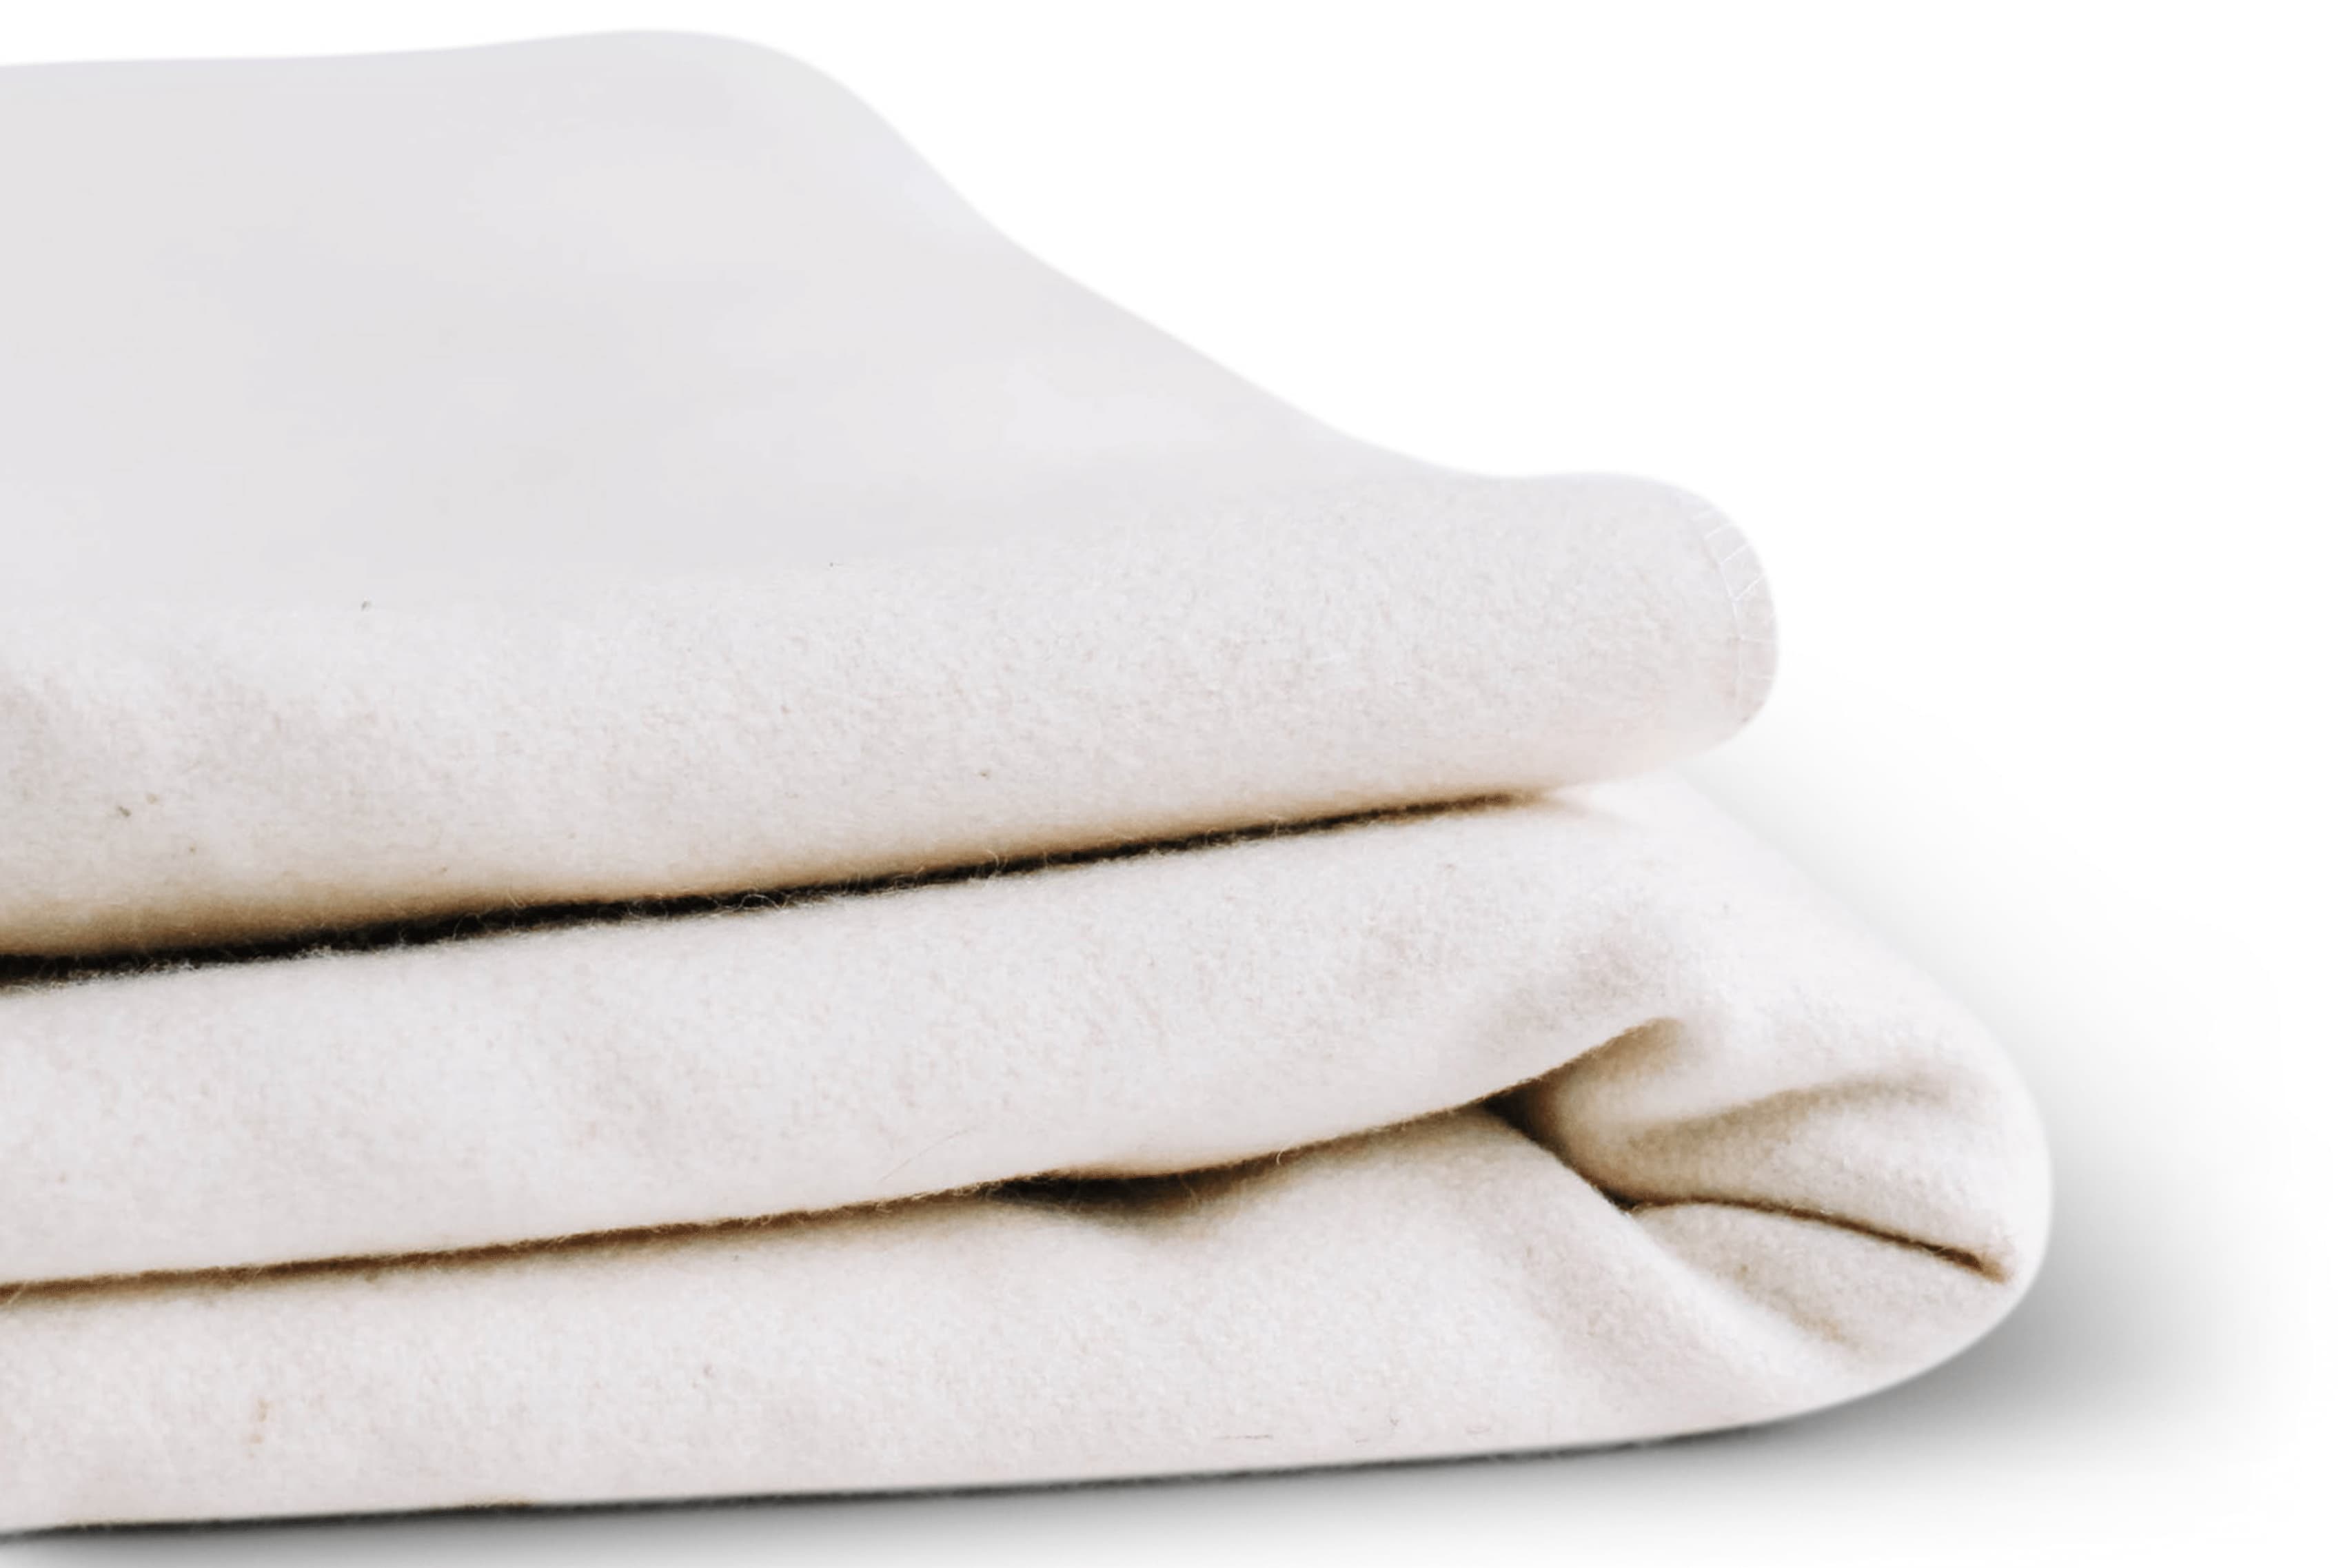 moisture resistant mattress pad